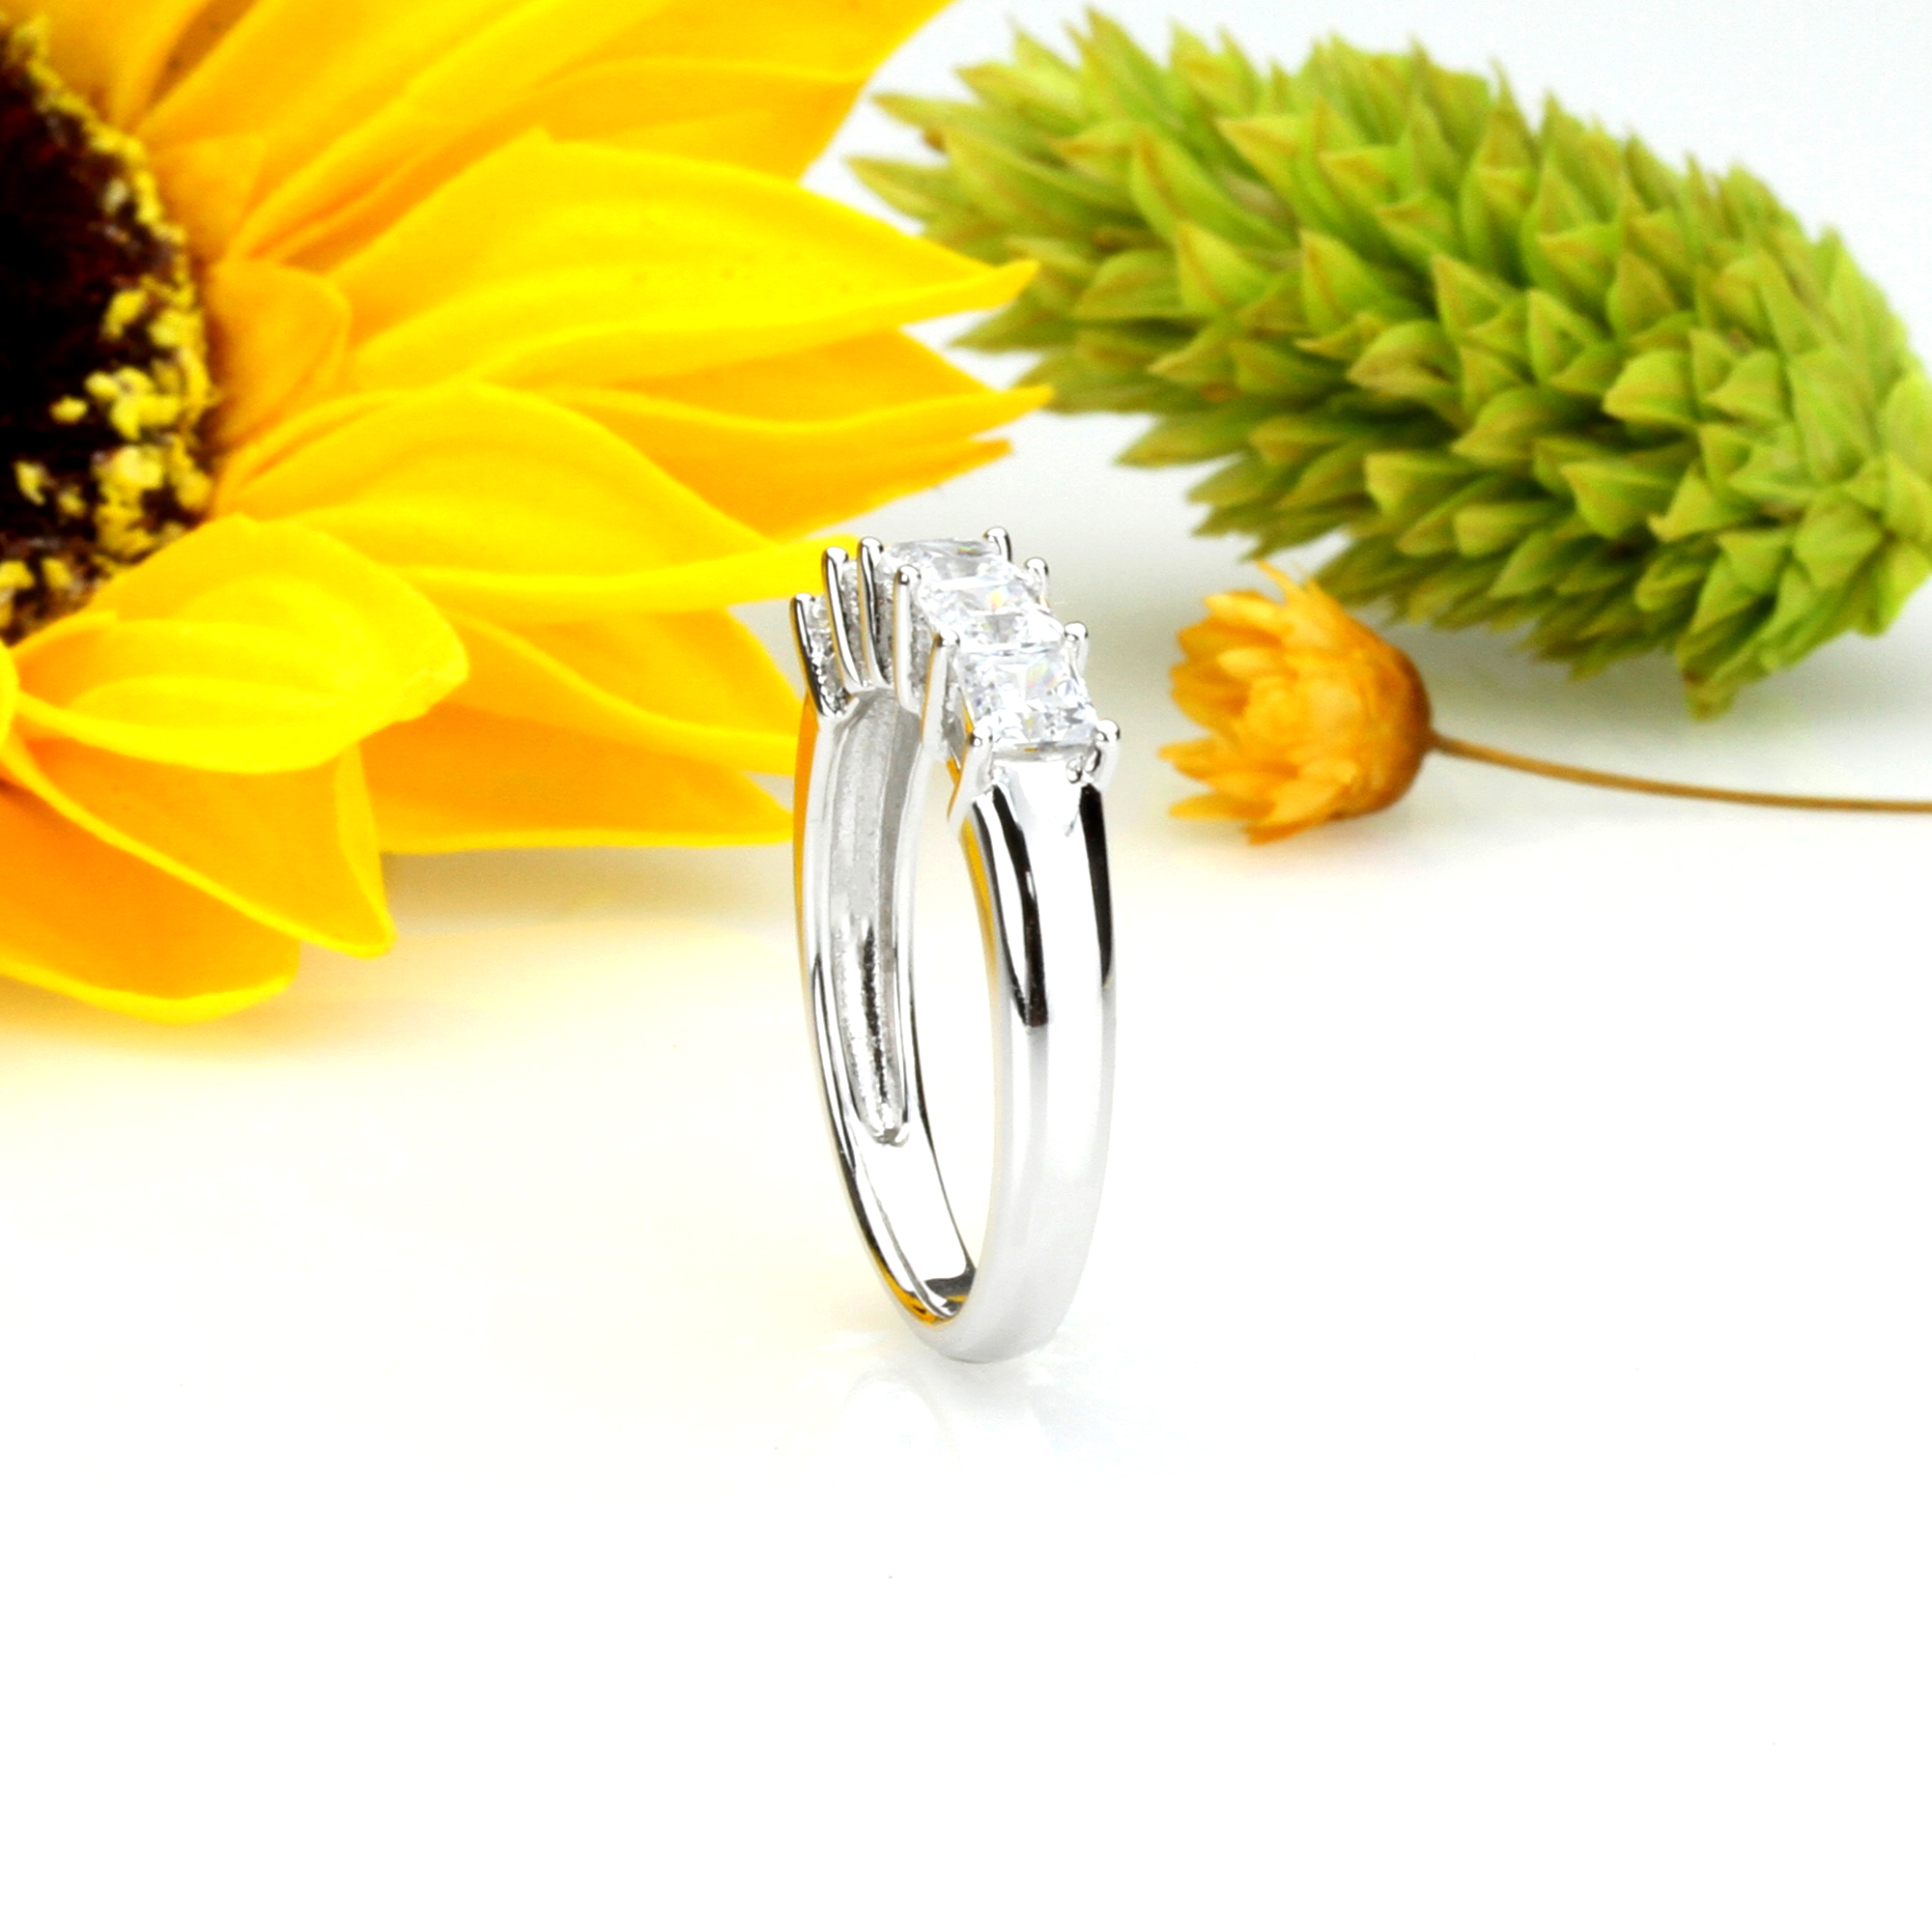 4mm Rhodium Plated Silver Wedding Ring Princess CZ Five Stone Band size7